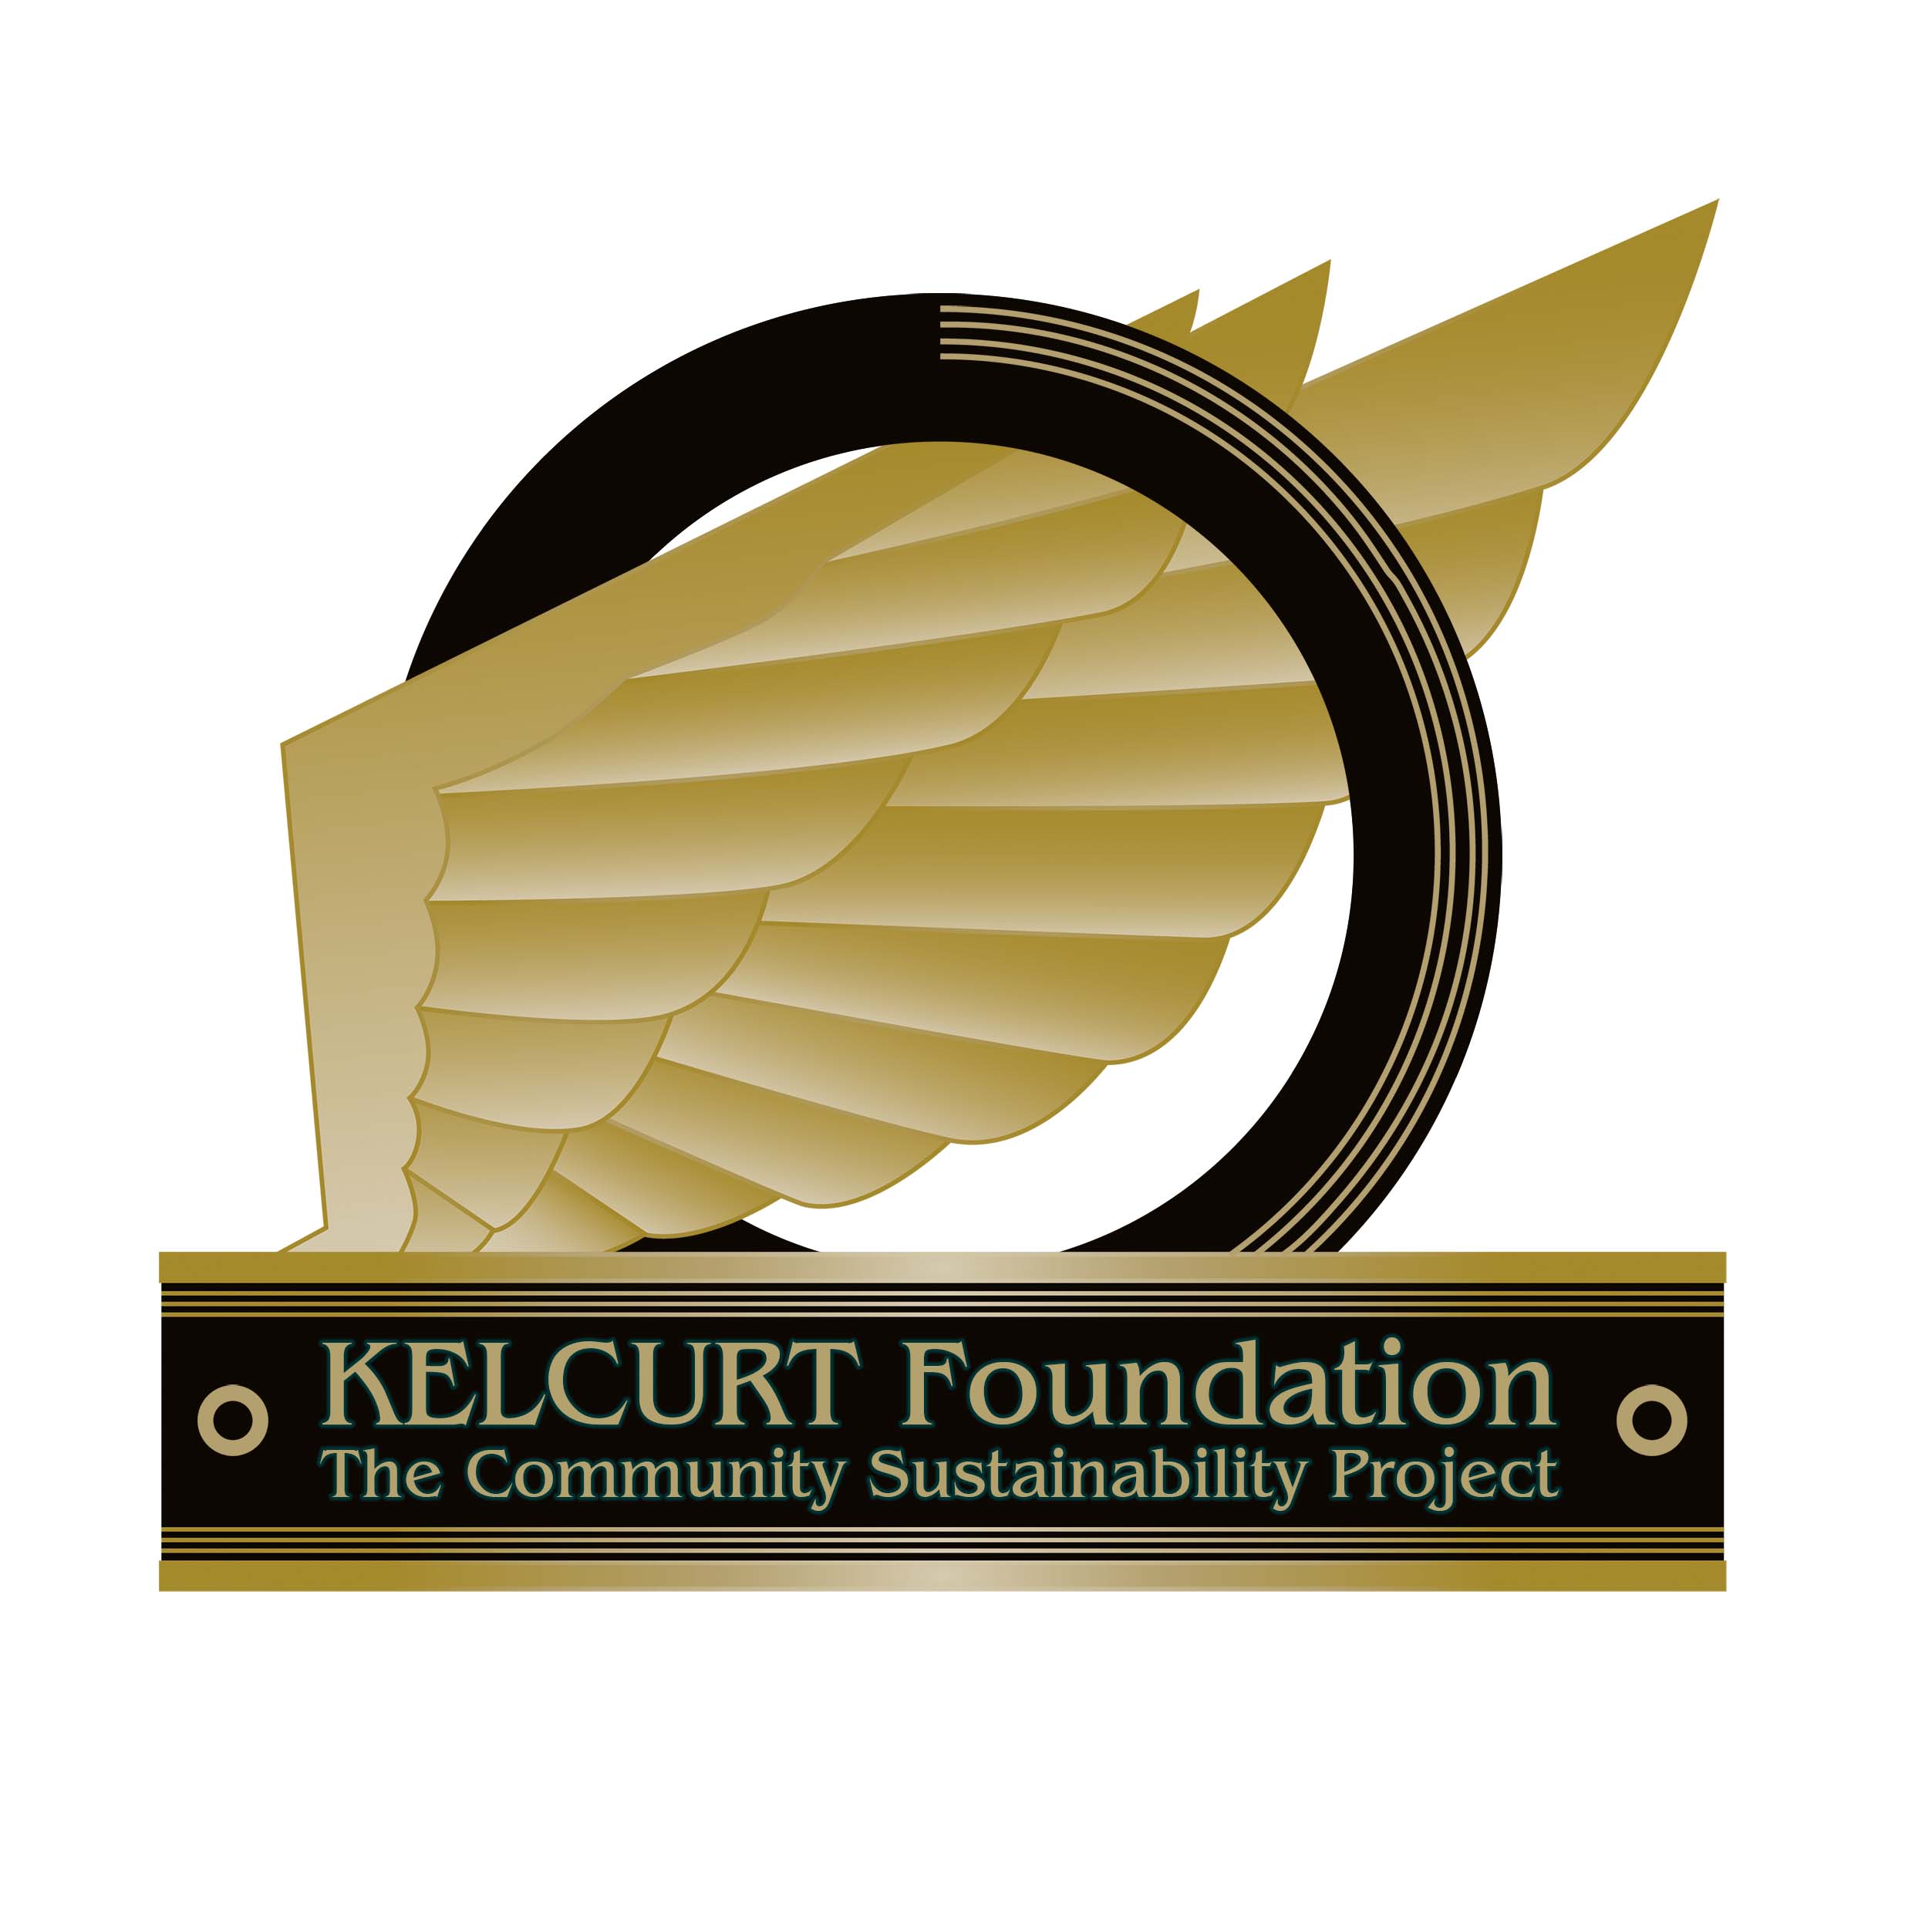 KELCURT Foundation logo